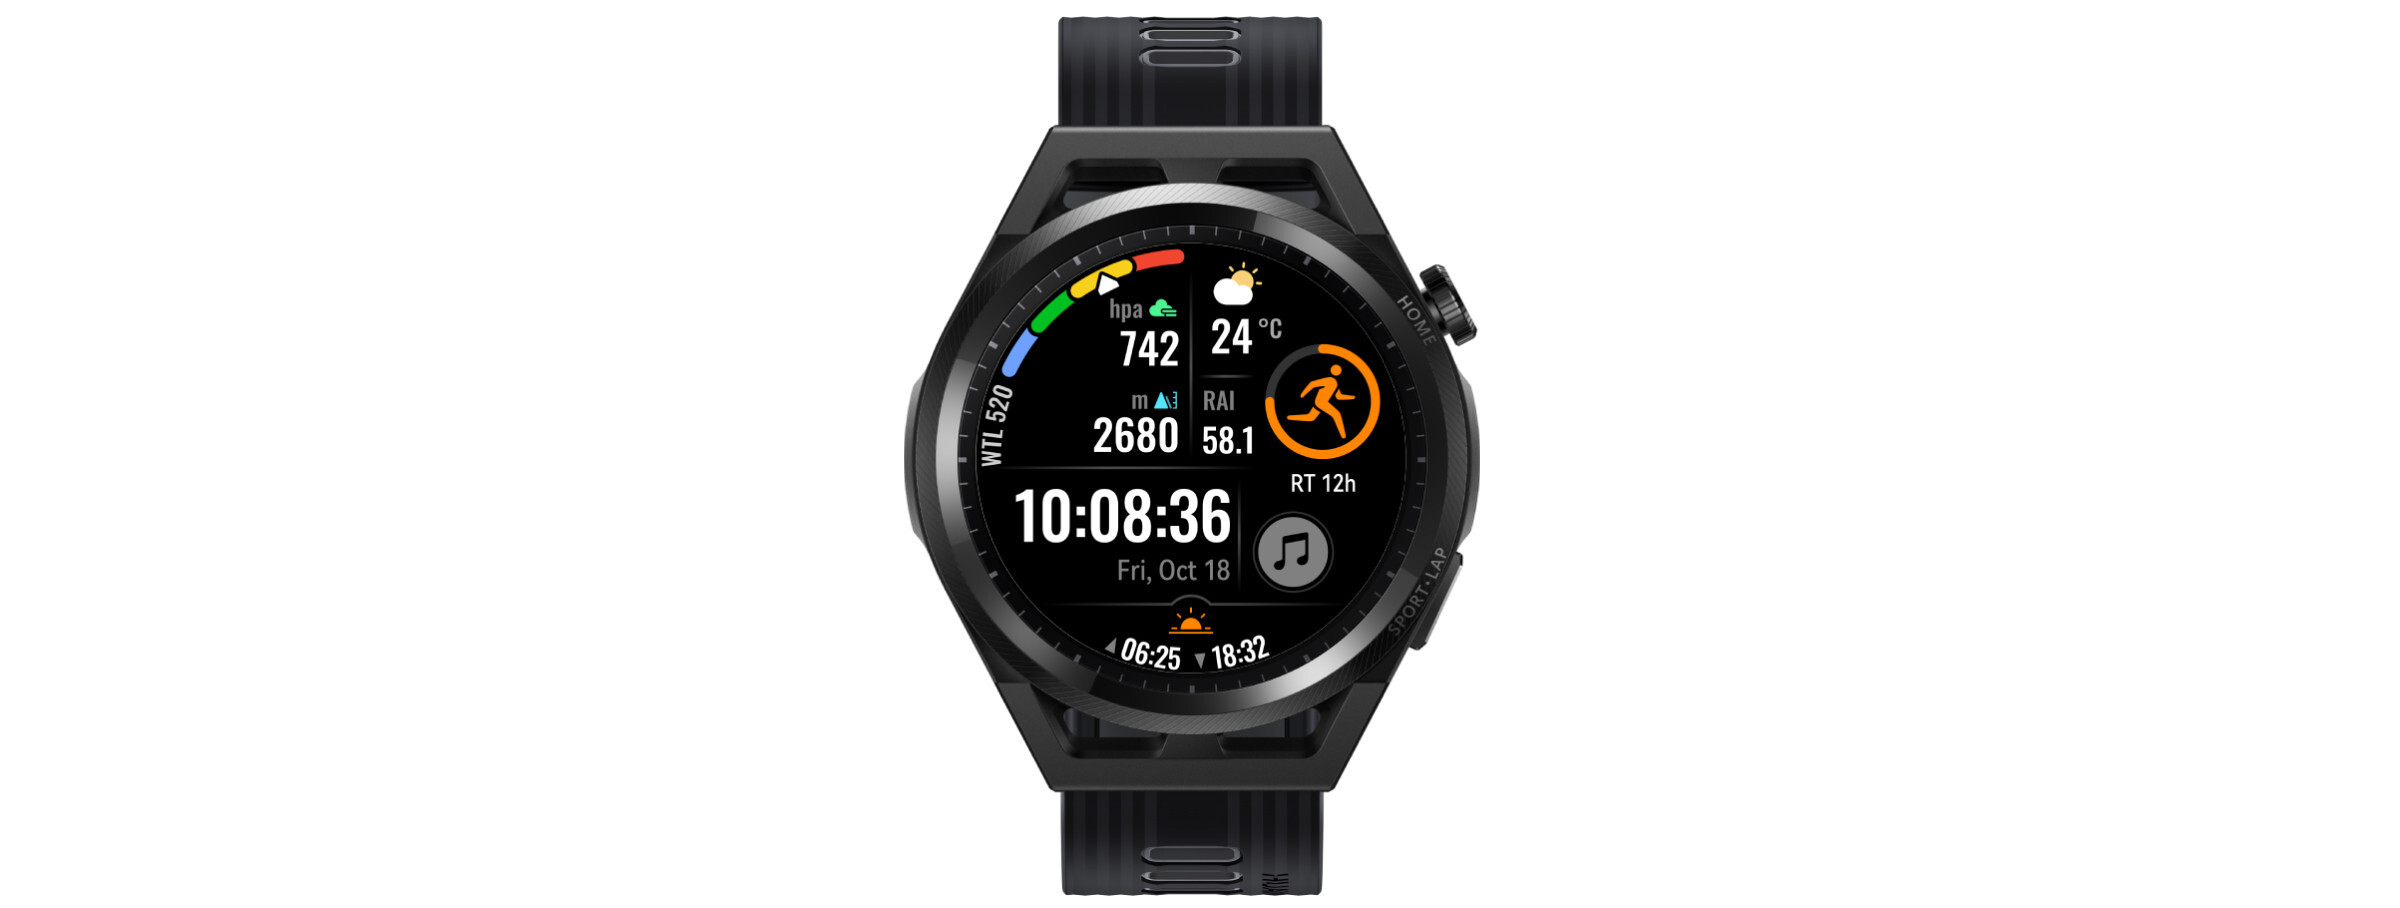 Huawei watch gt Runner купить. Сравнение смарт часов huawei